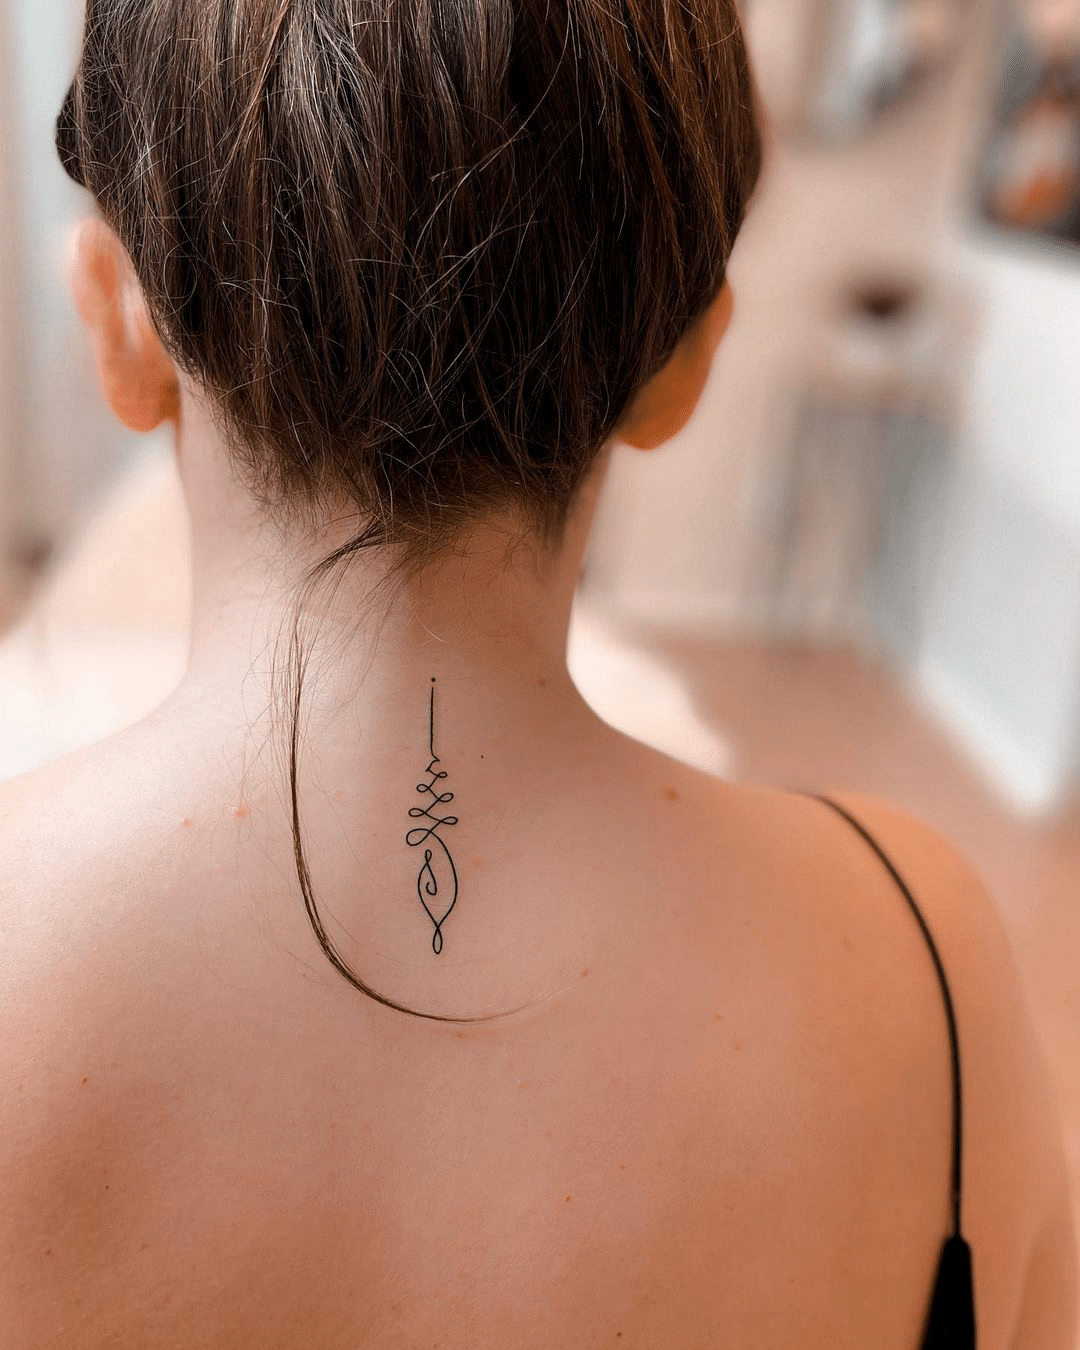 nape line tattoo design for women